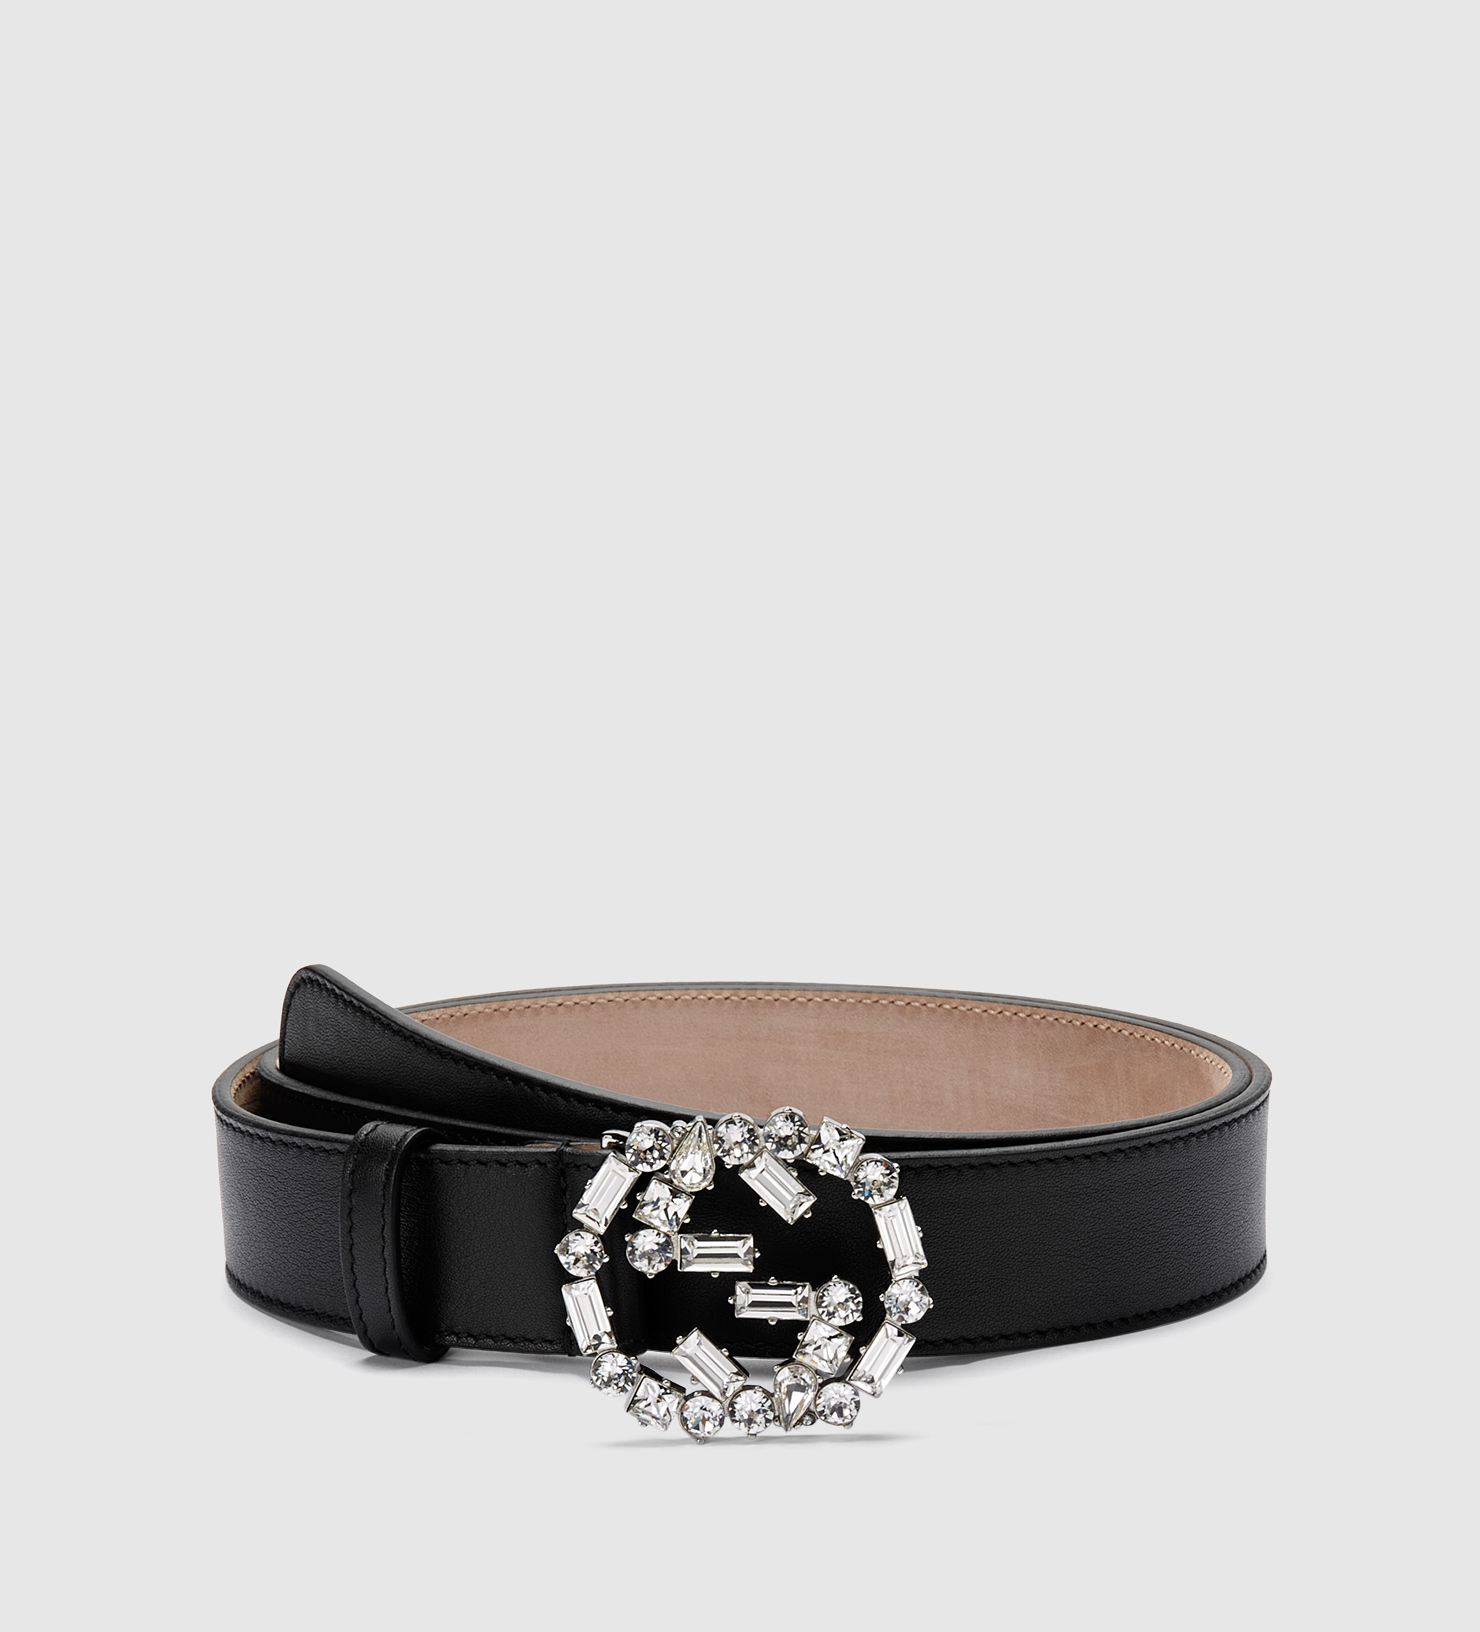 Gucci Black Leather Belt With Crystal Interlocking G Buckle in Black | Lyst